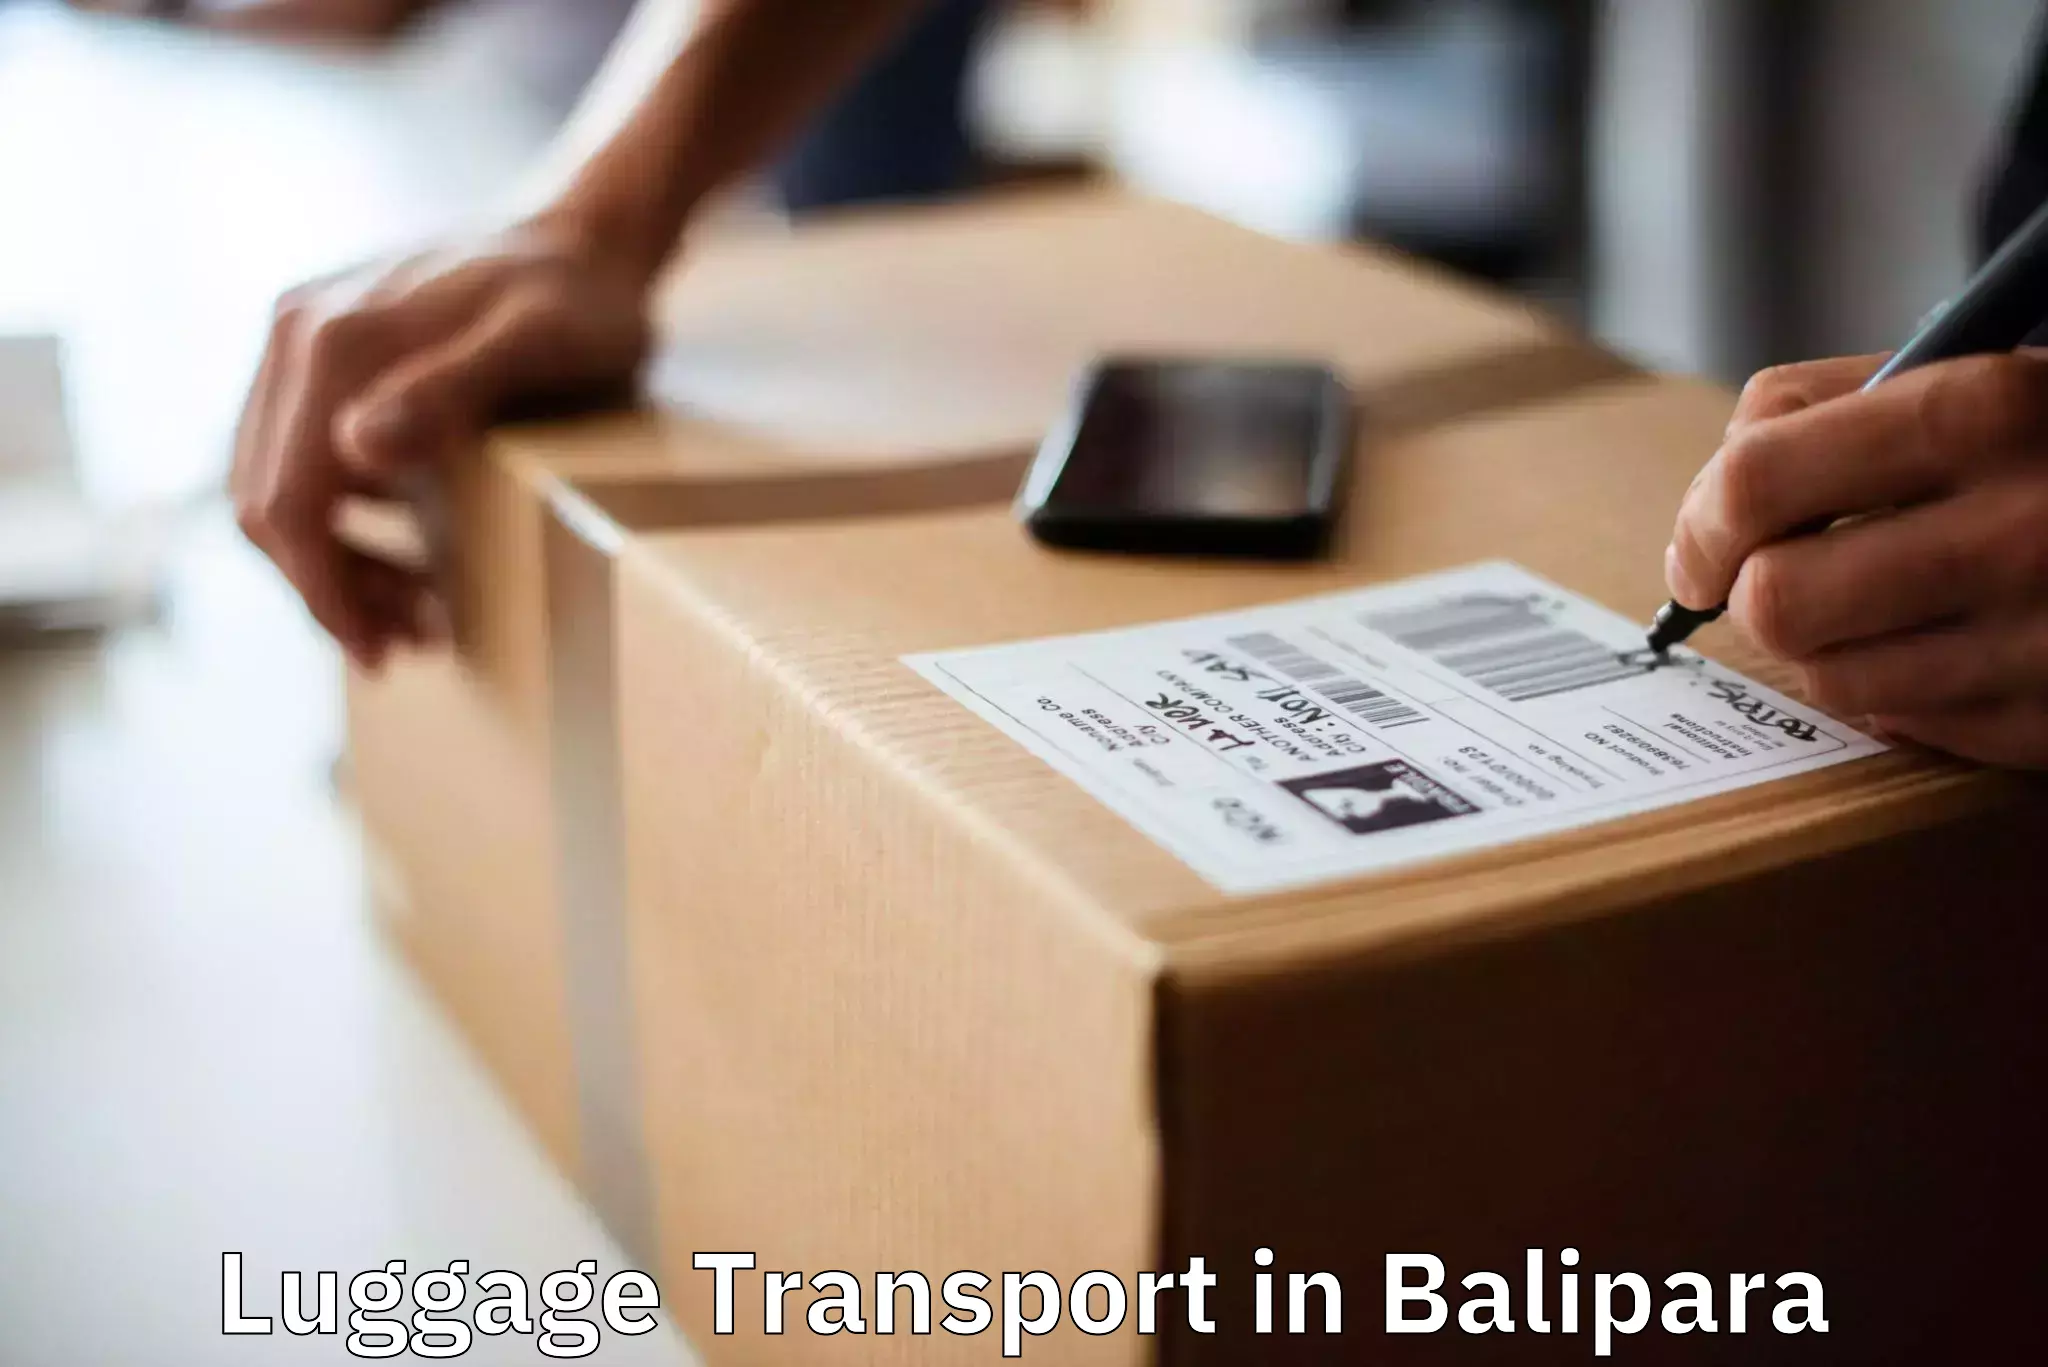 Baggage transport network in Balipara